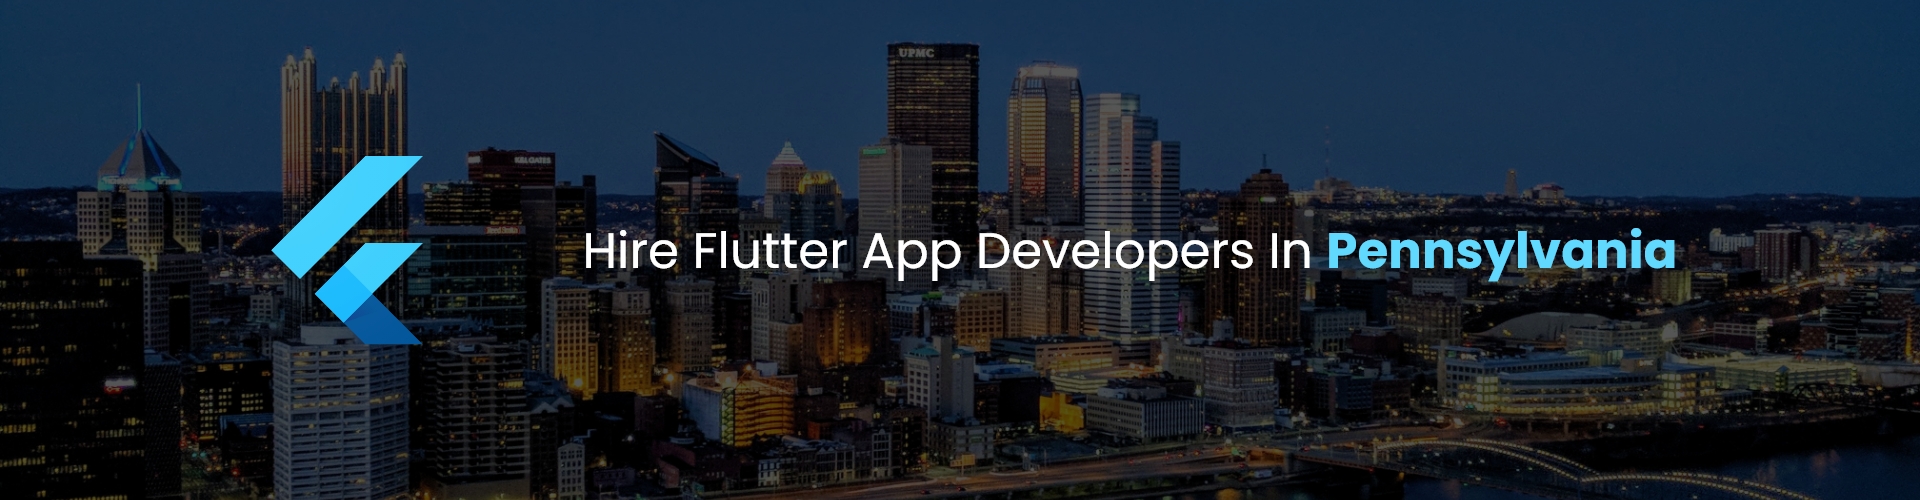 hire flutter app developers in pennsylvania